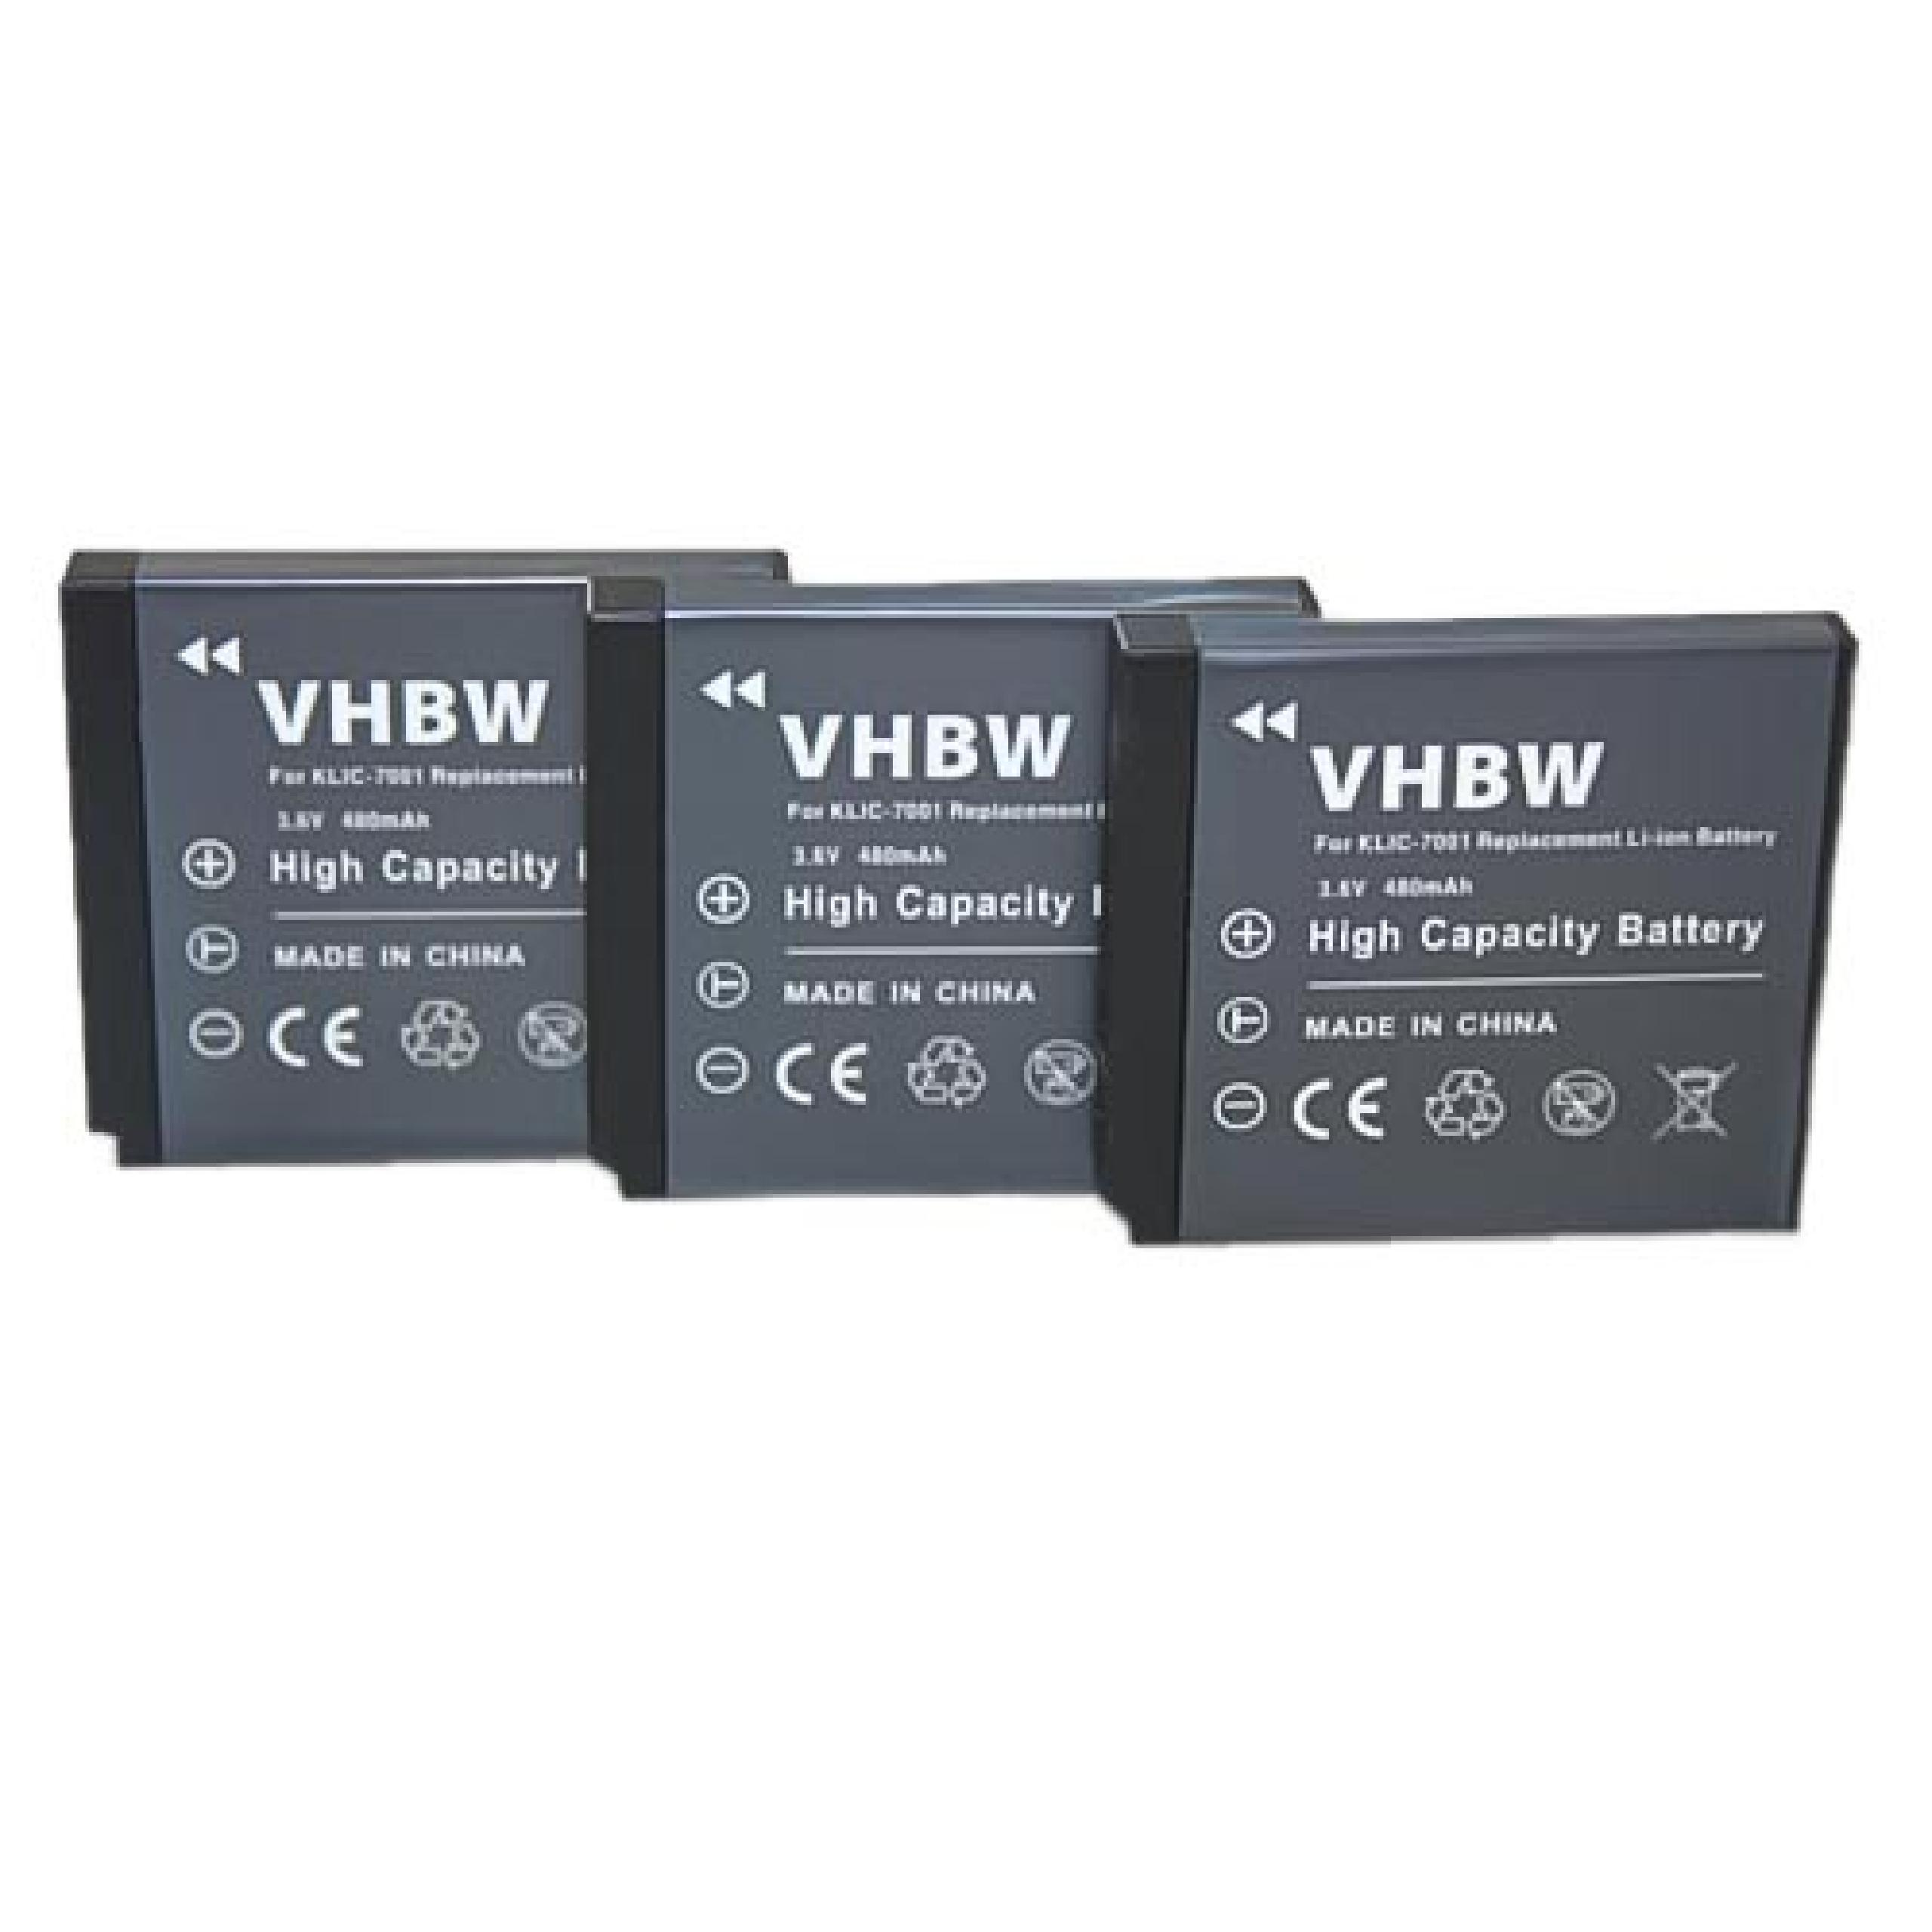 VHBW kompatibel mit Rollei DXG-5C8V, DXG-5C0, 3.6 Kamera, 5C8VR, DXG-599V Volt, Akku Li-Ion 650 DA101, DXG-5C0V, - DA-101, DXG